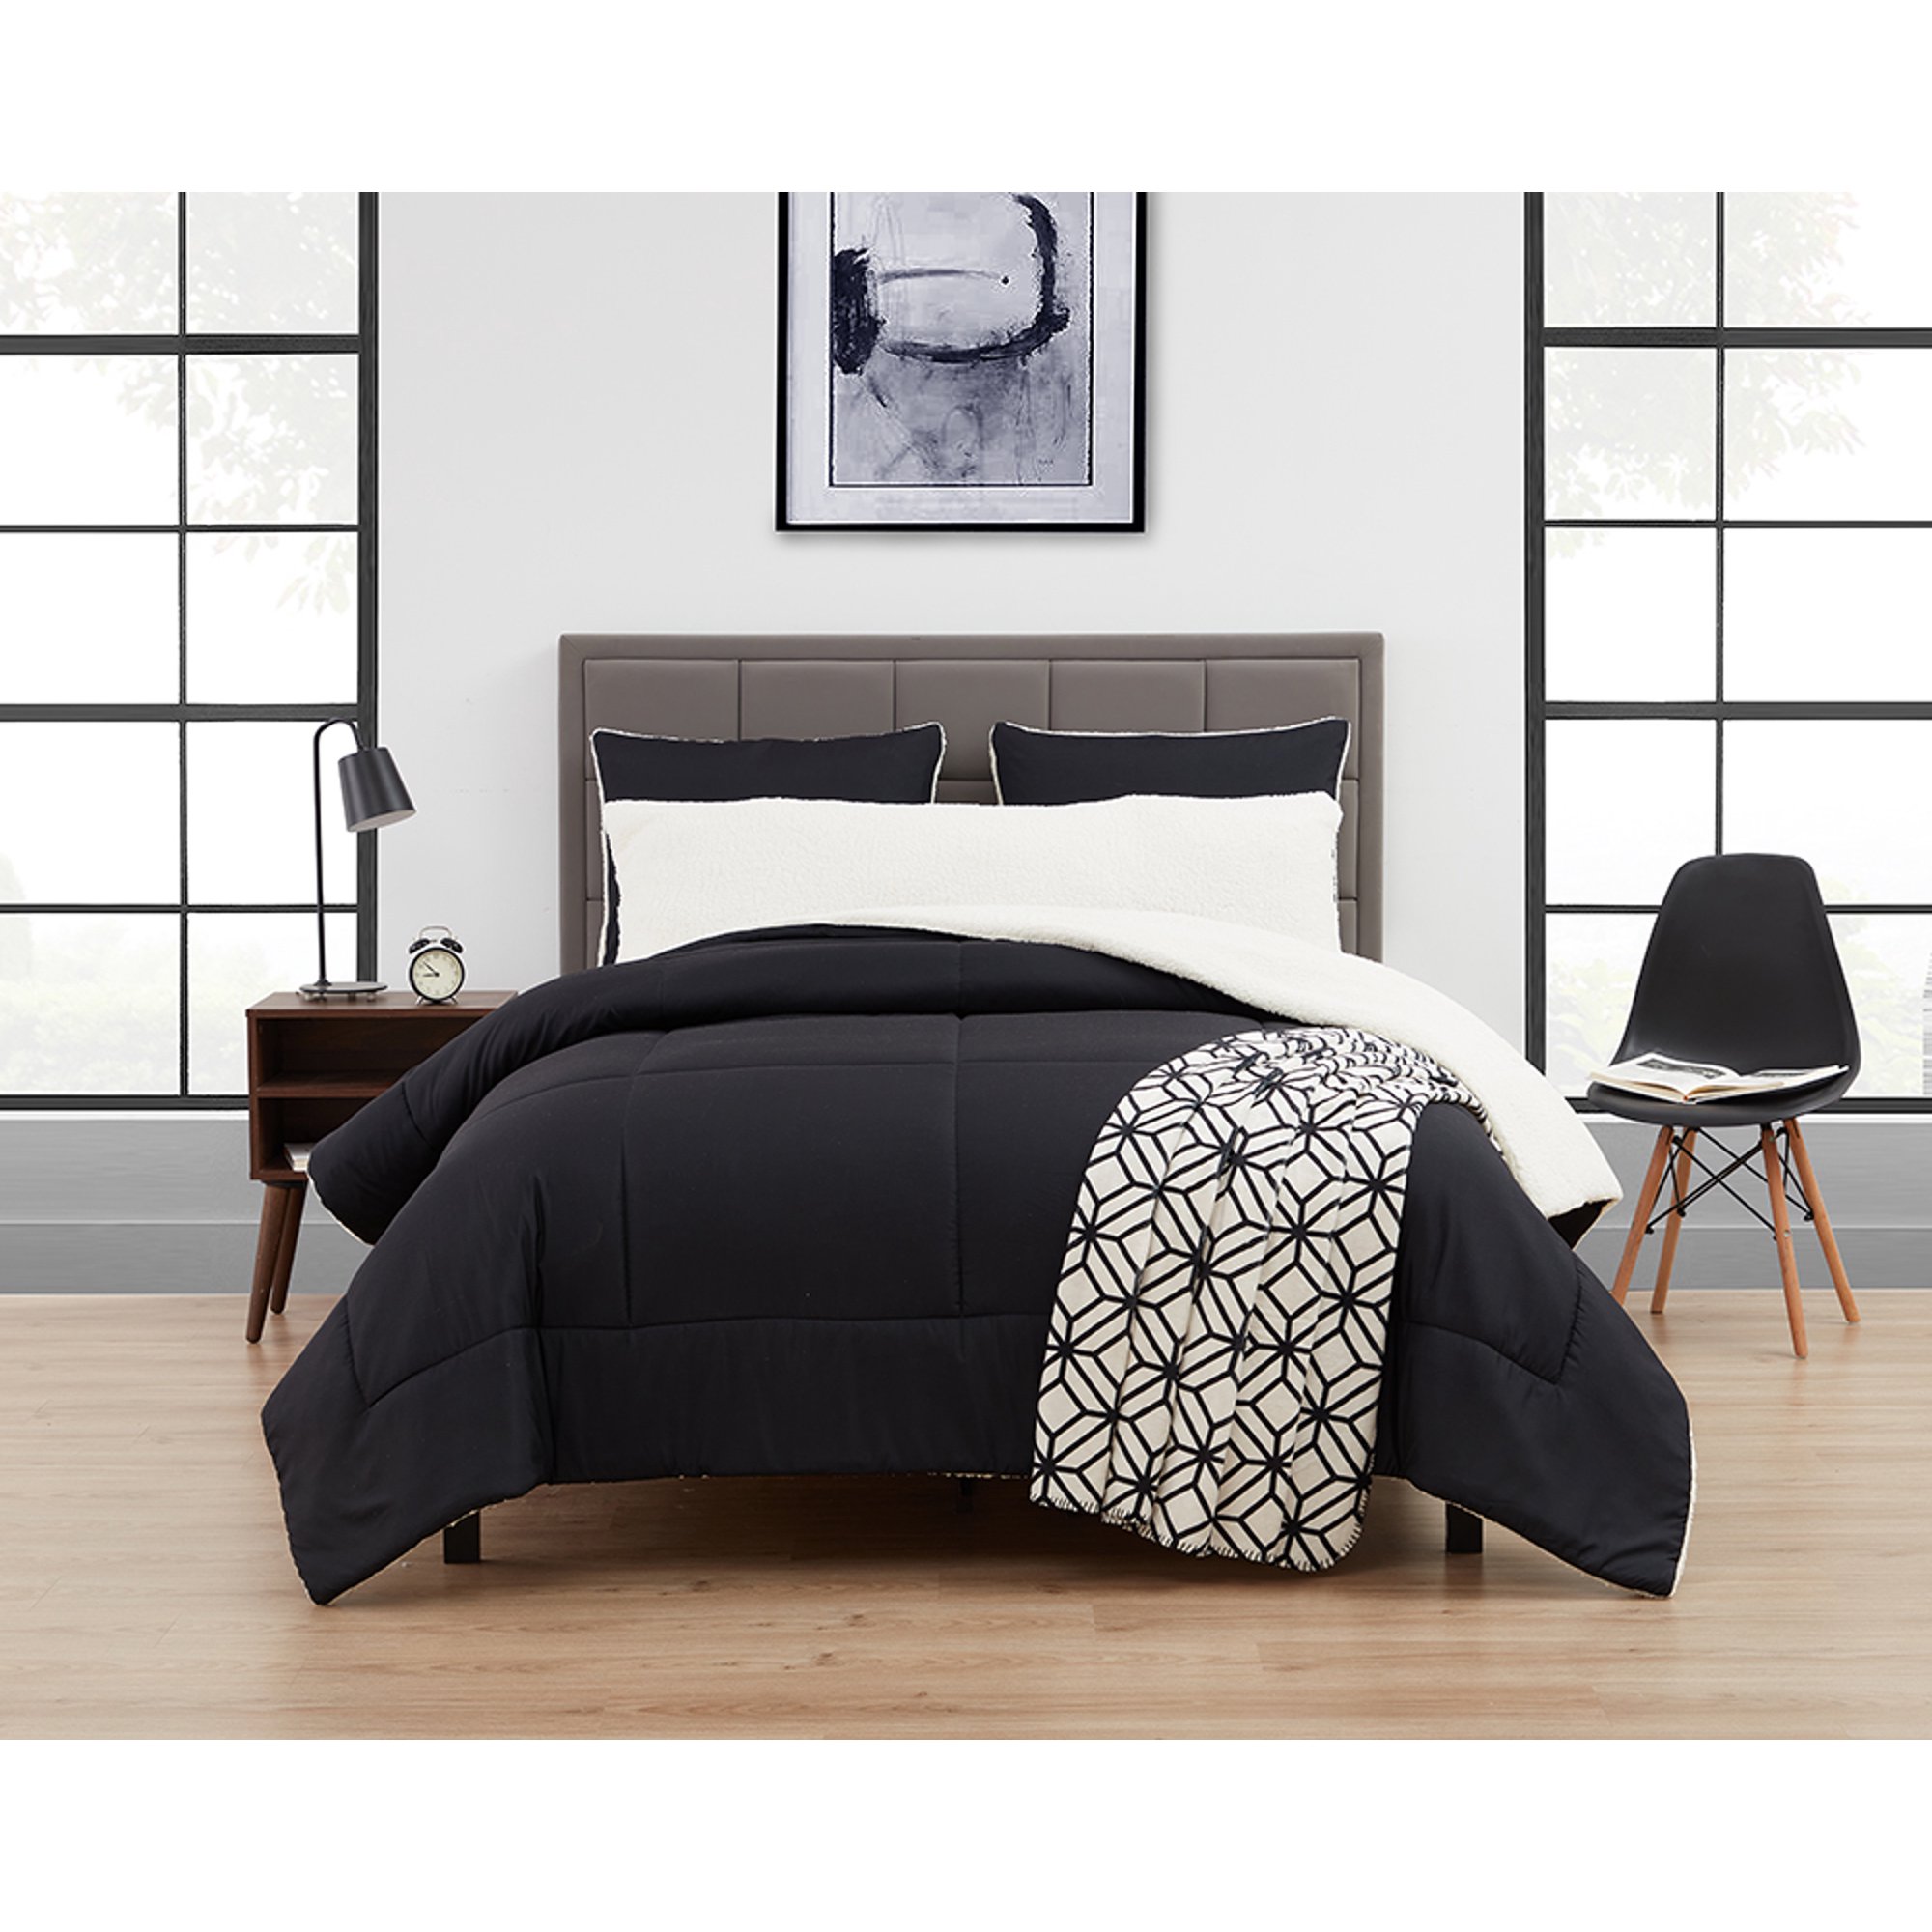 Serta So Cozy 5-Piece Sherpa Reverse Comforter Set, Rich Black, Full/Queen - image 2 of 10